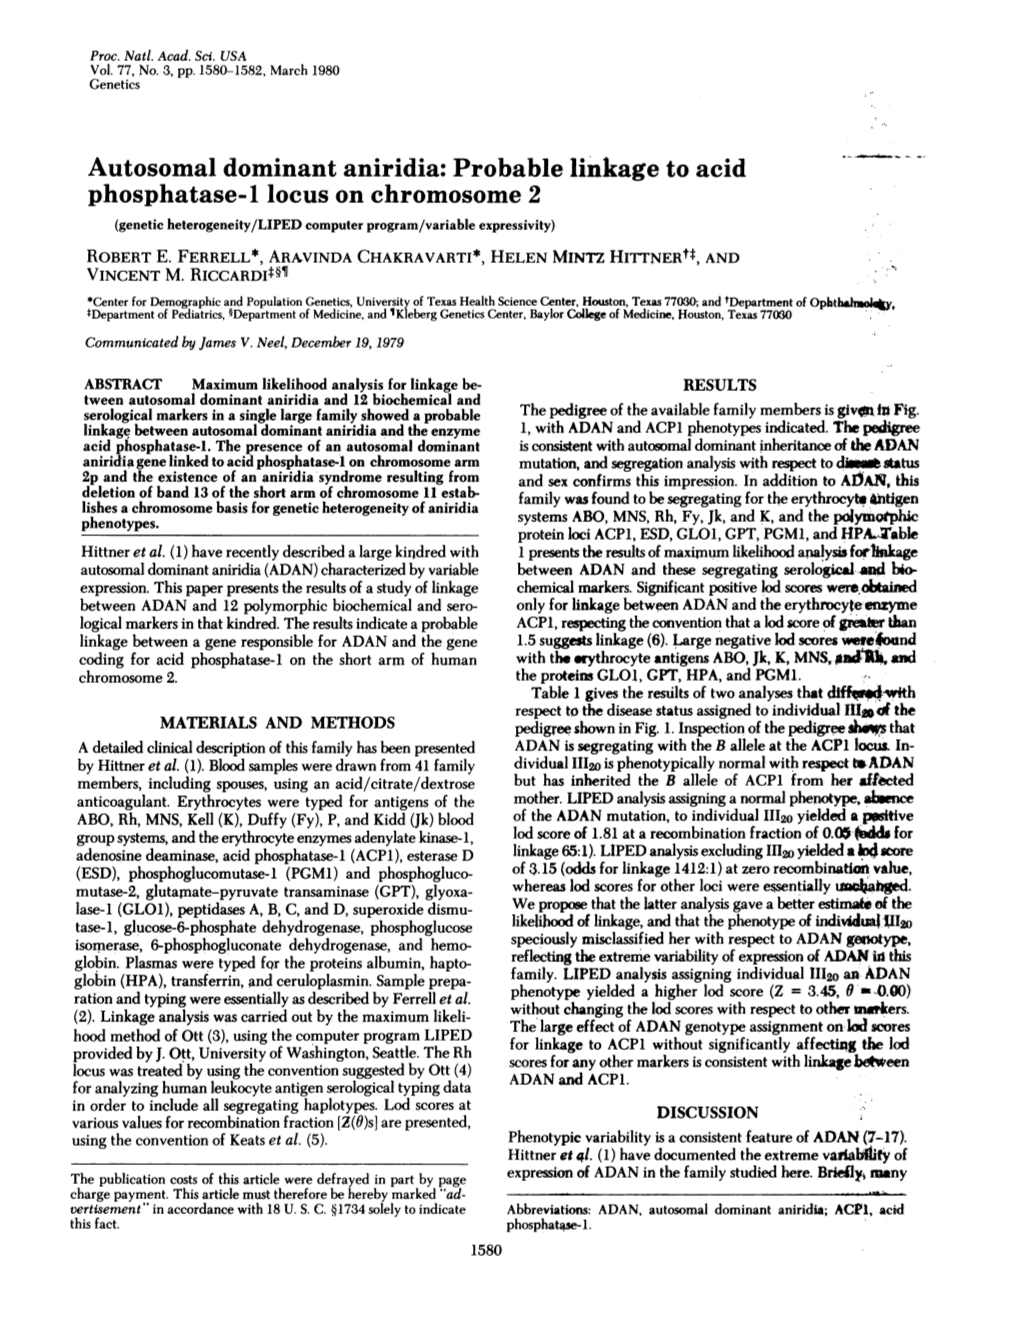 Autosomal Dominant Aniridia: Probable Linkage to Acid